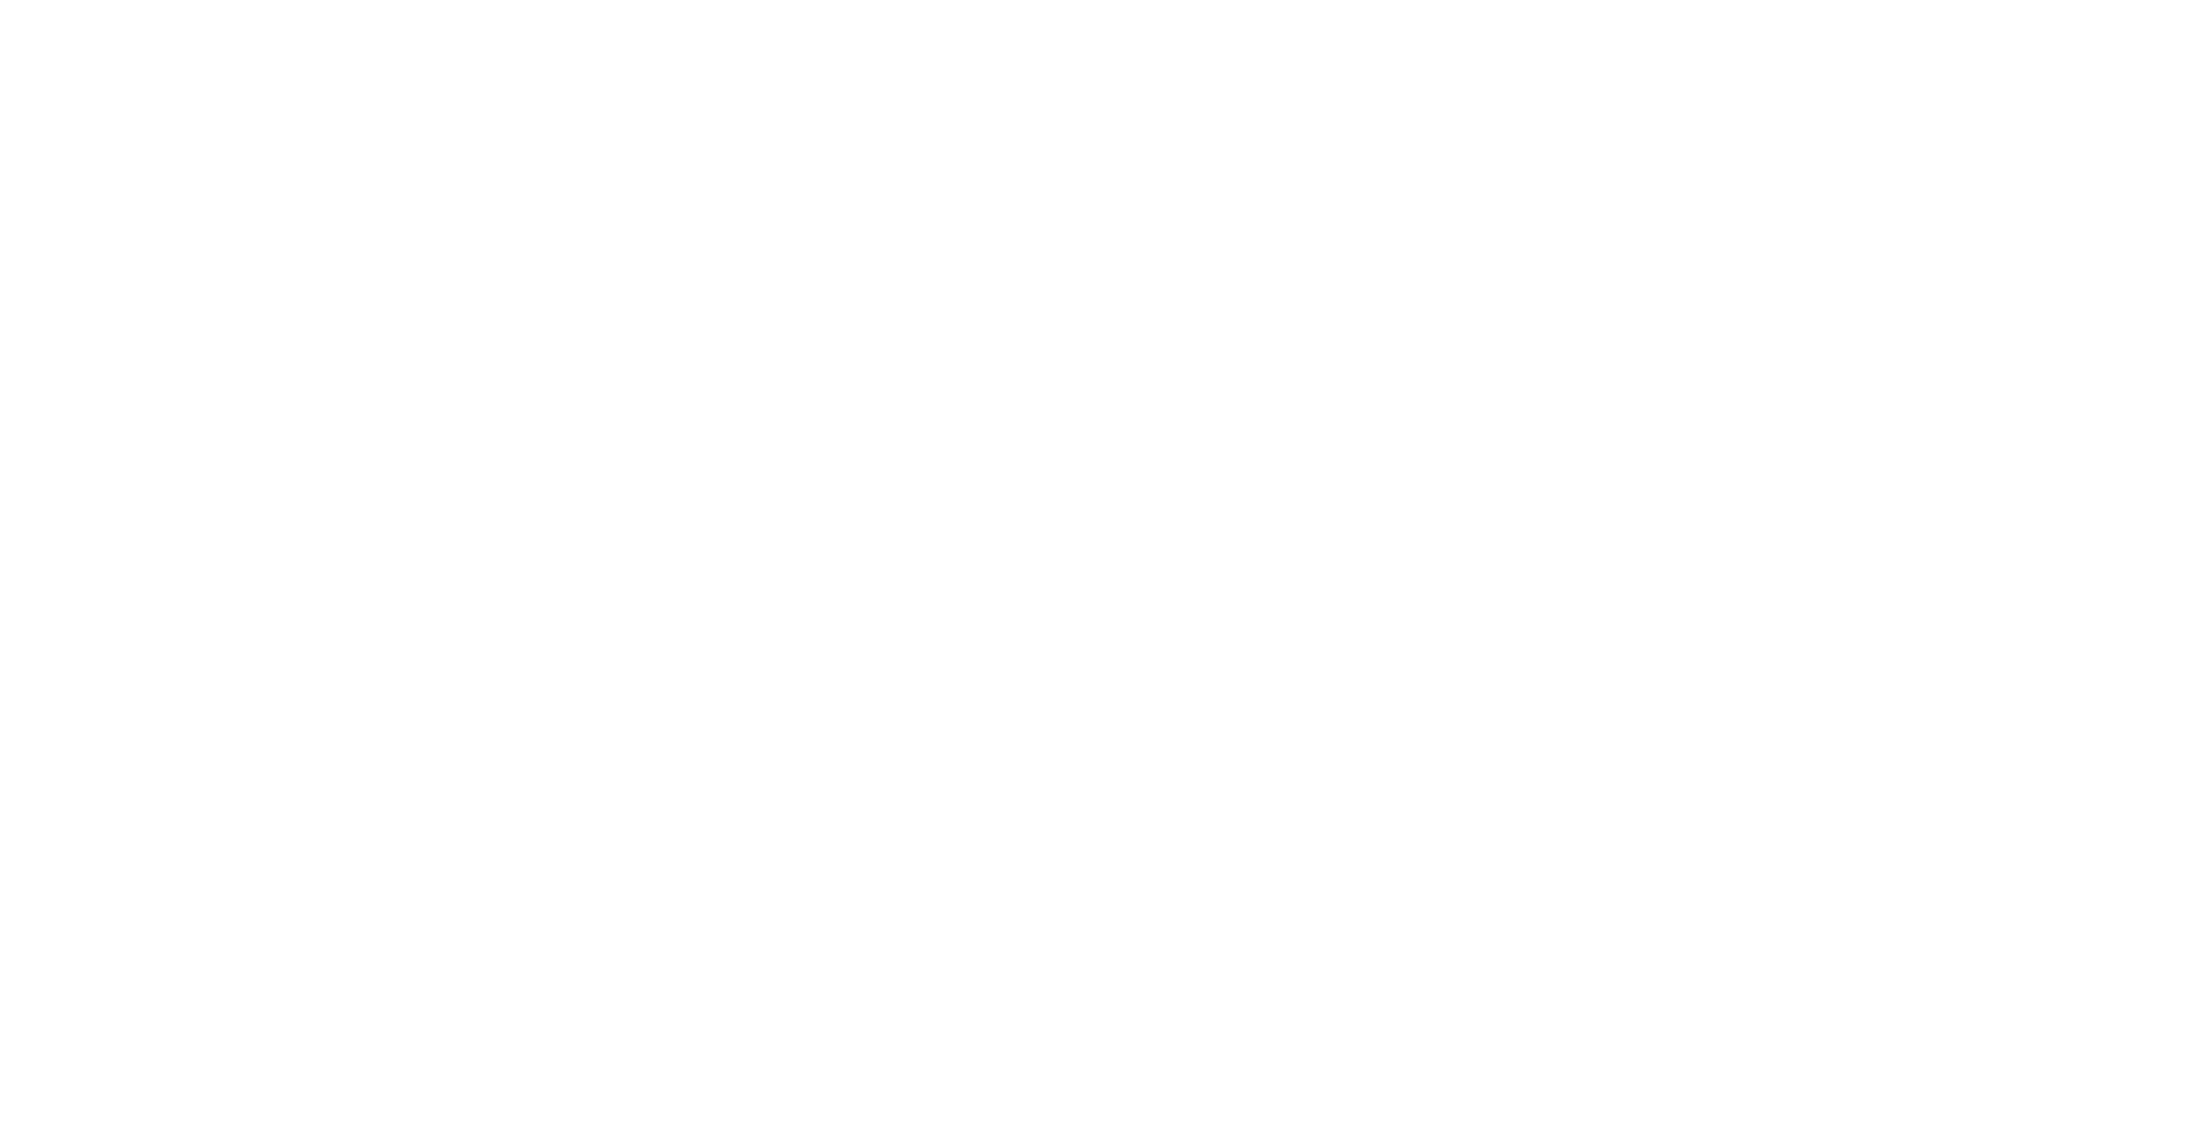 AStar Central